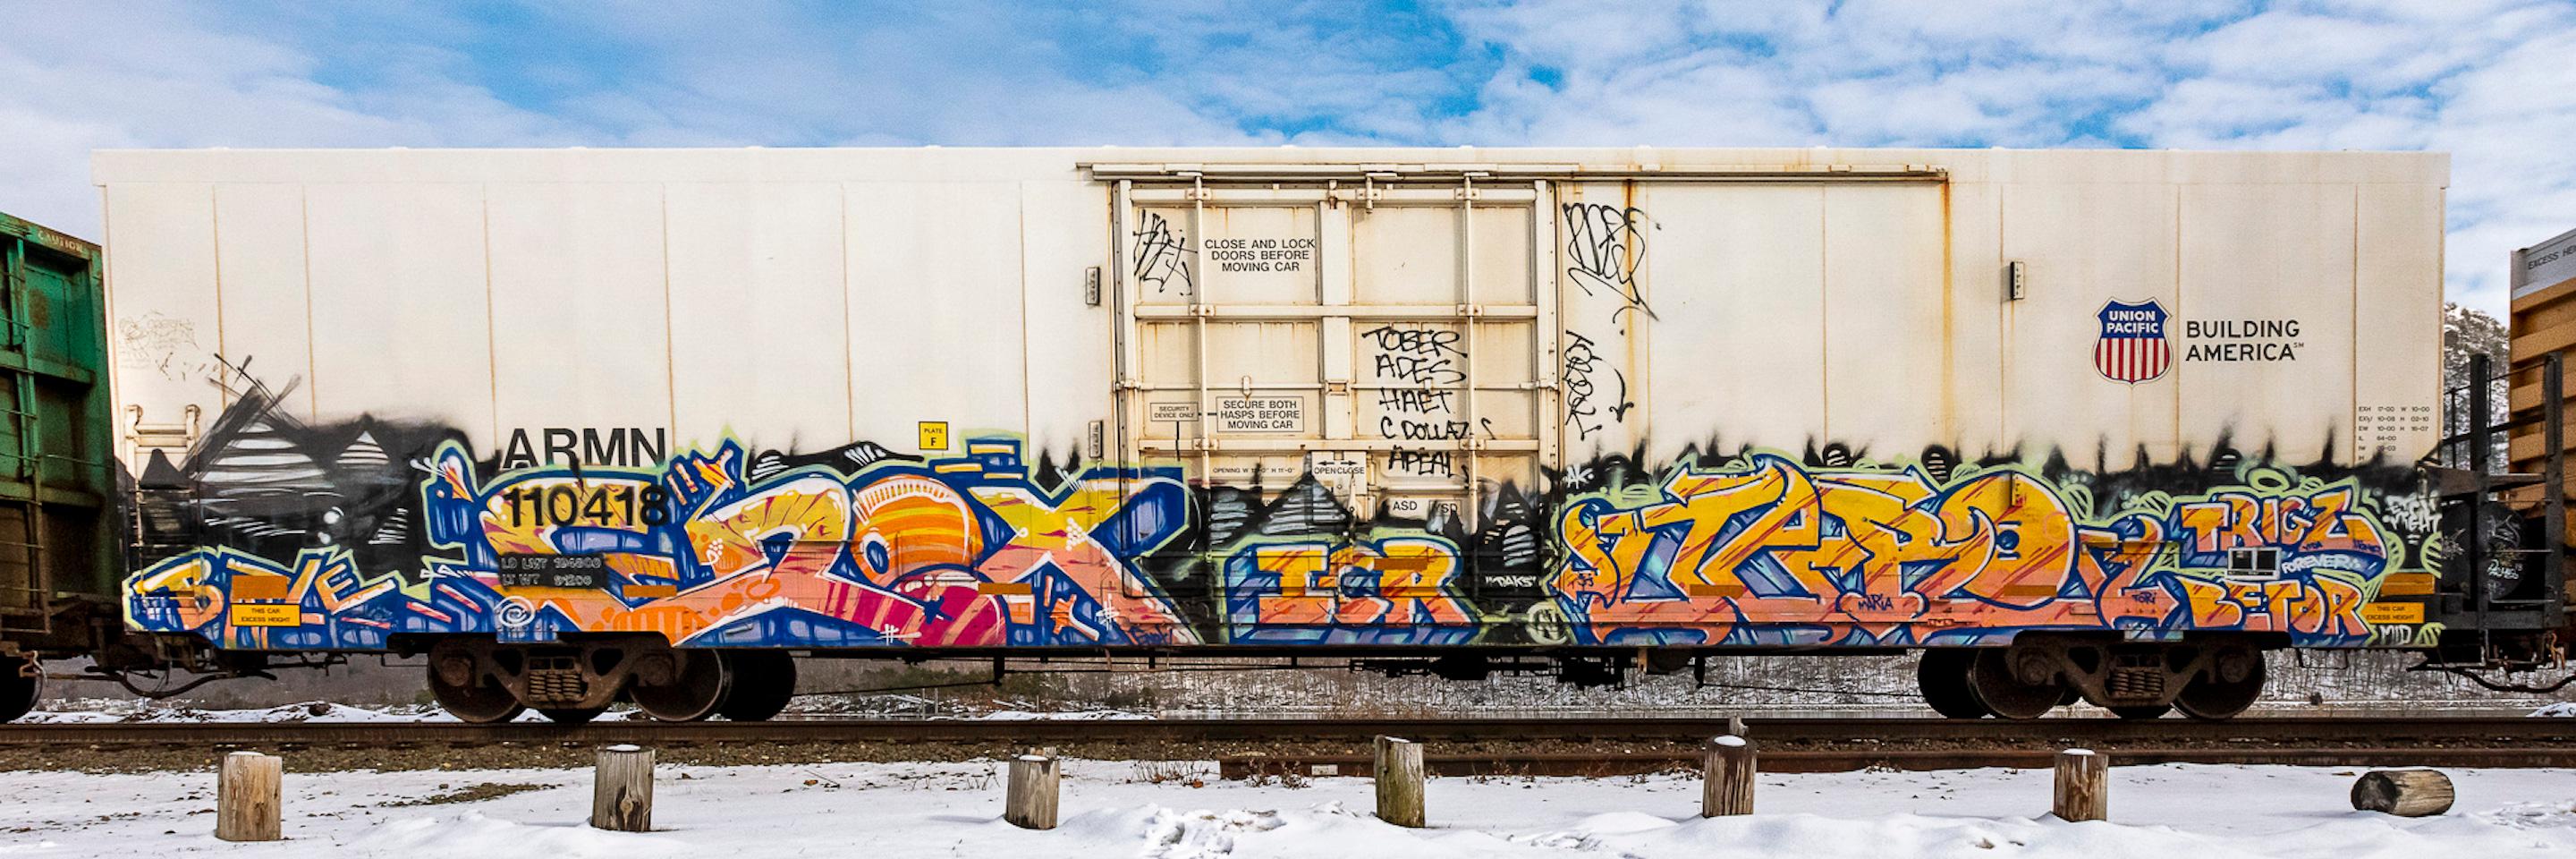 Stephen Mallon Color Photograph – ""Armn 110418" Graffiti bemalter Eisenbahnwaggon, Fotografie in limitierter Auflage